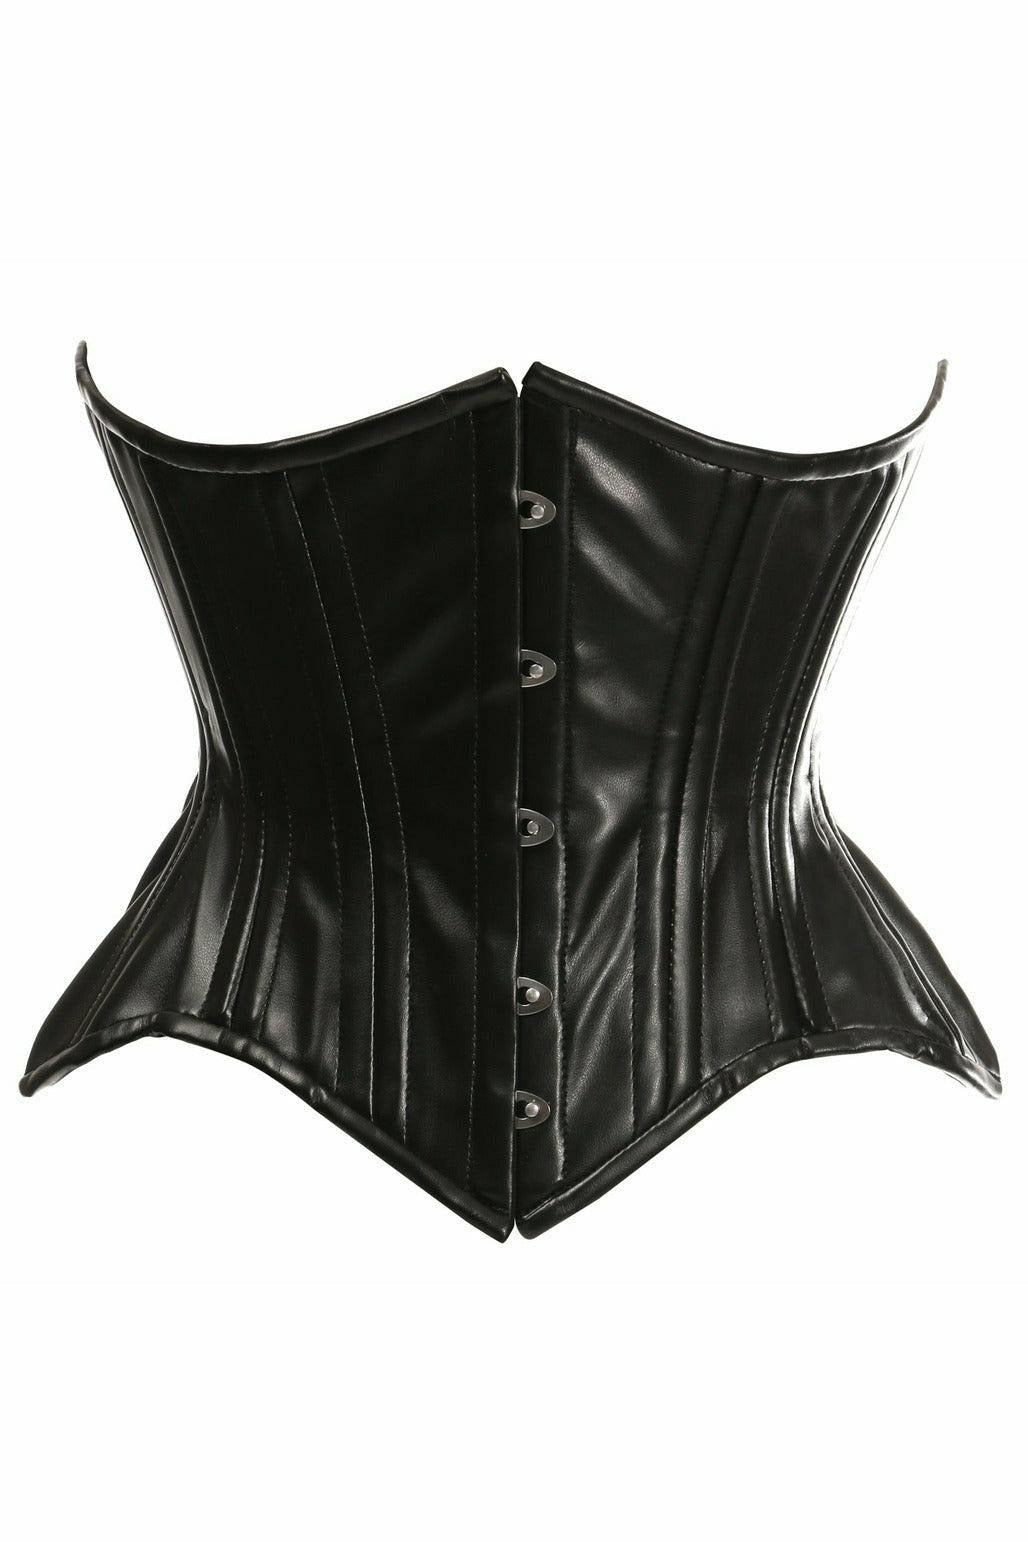 Top Drawer Black Faux Leather Double Steel Boned Curvy Cut Waist Cincher Corset-Daisy Corsets